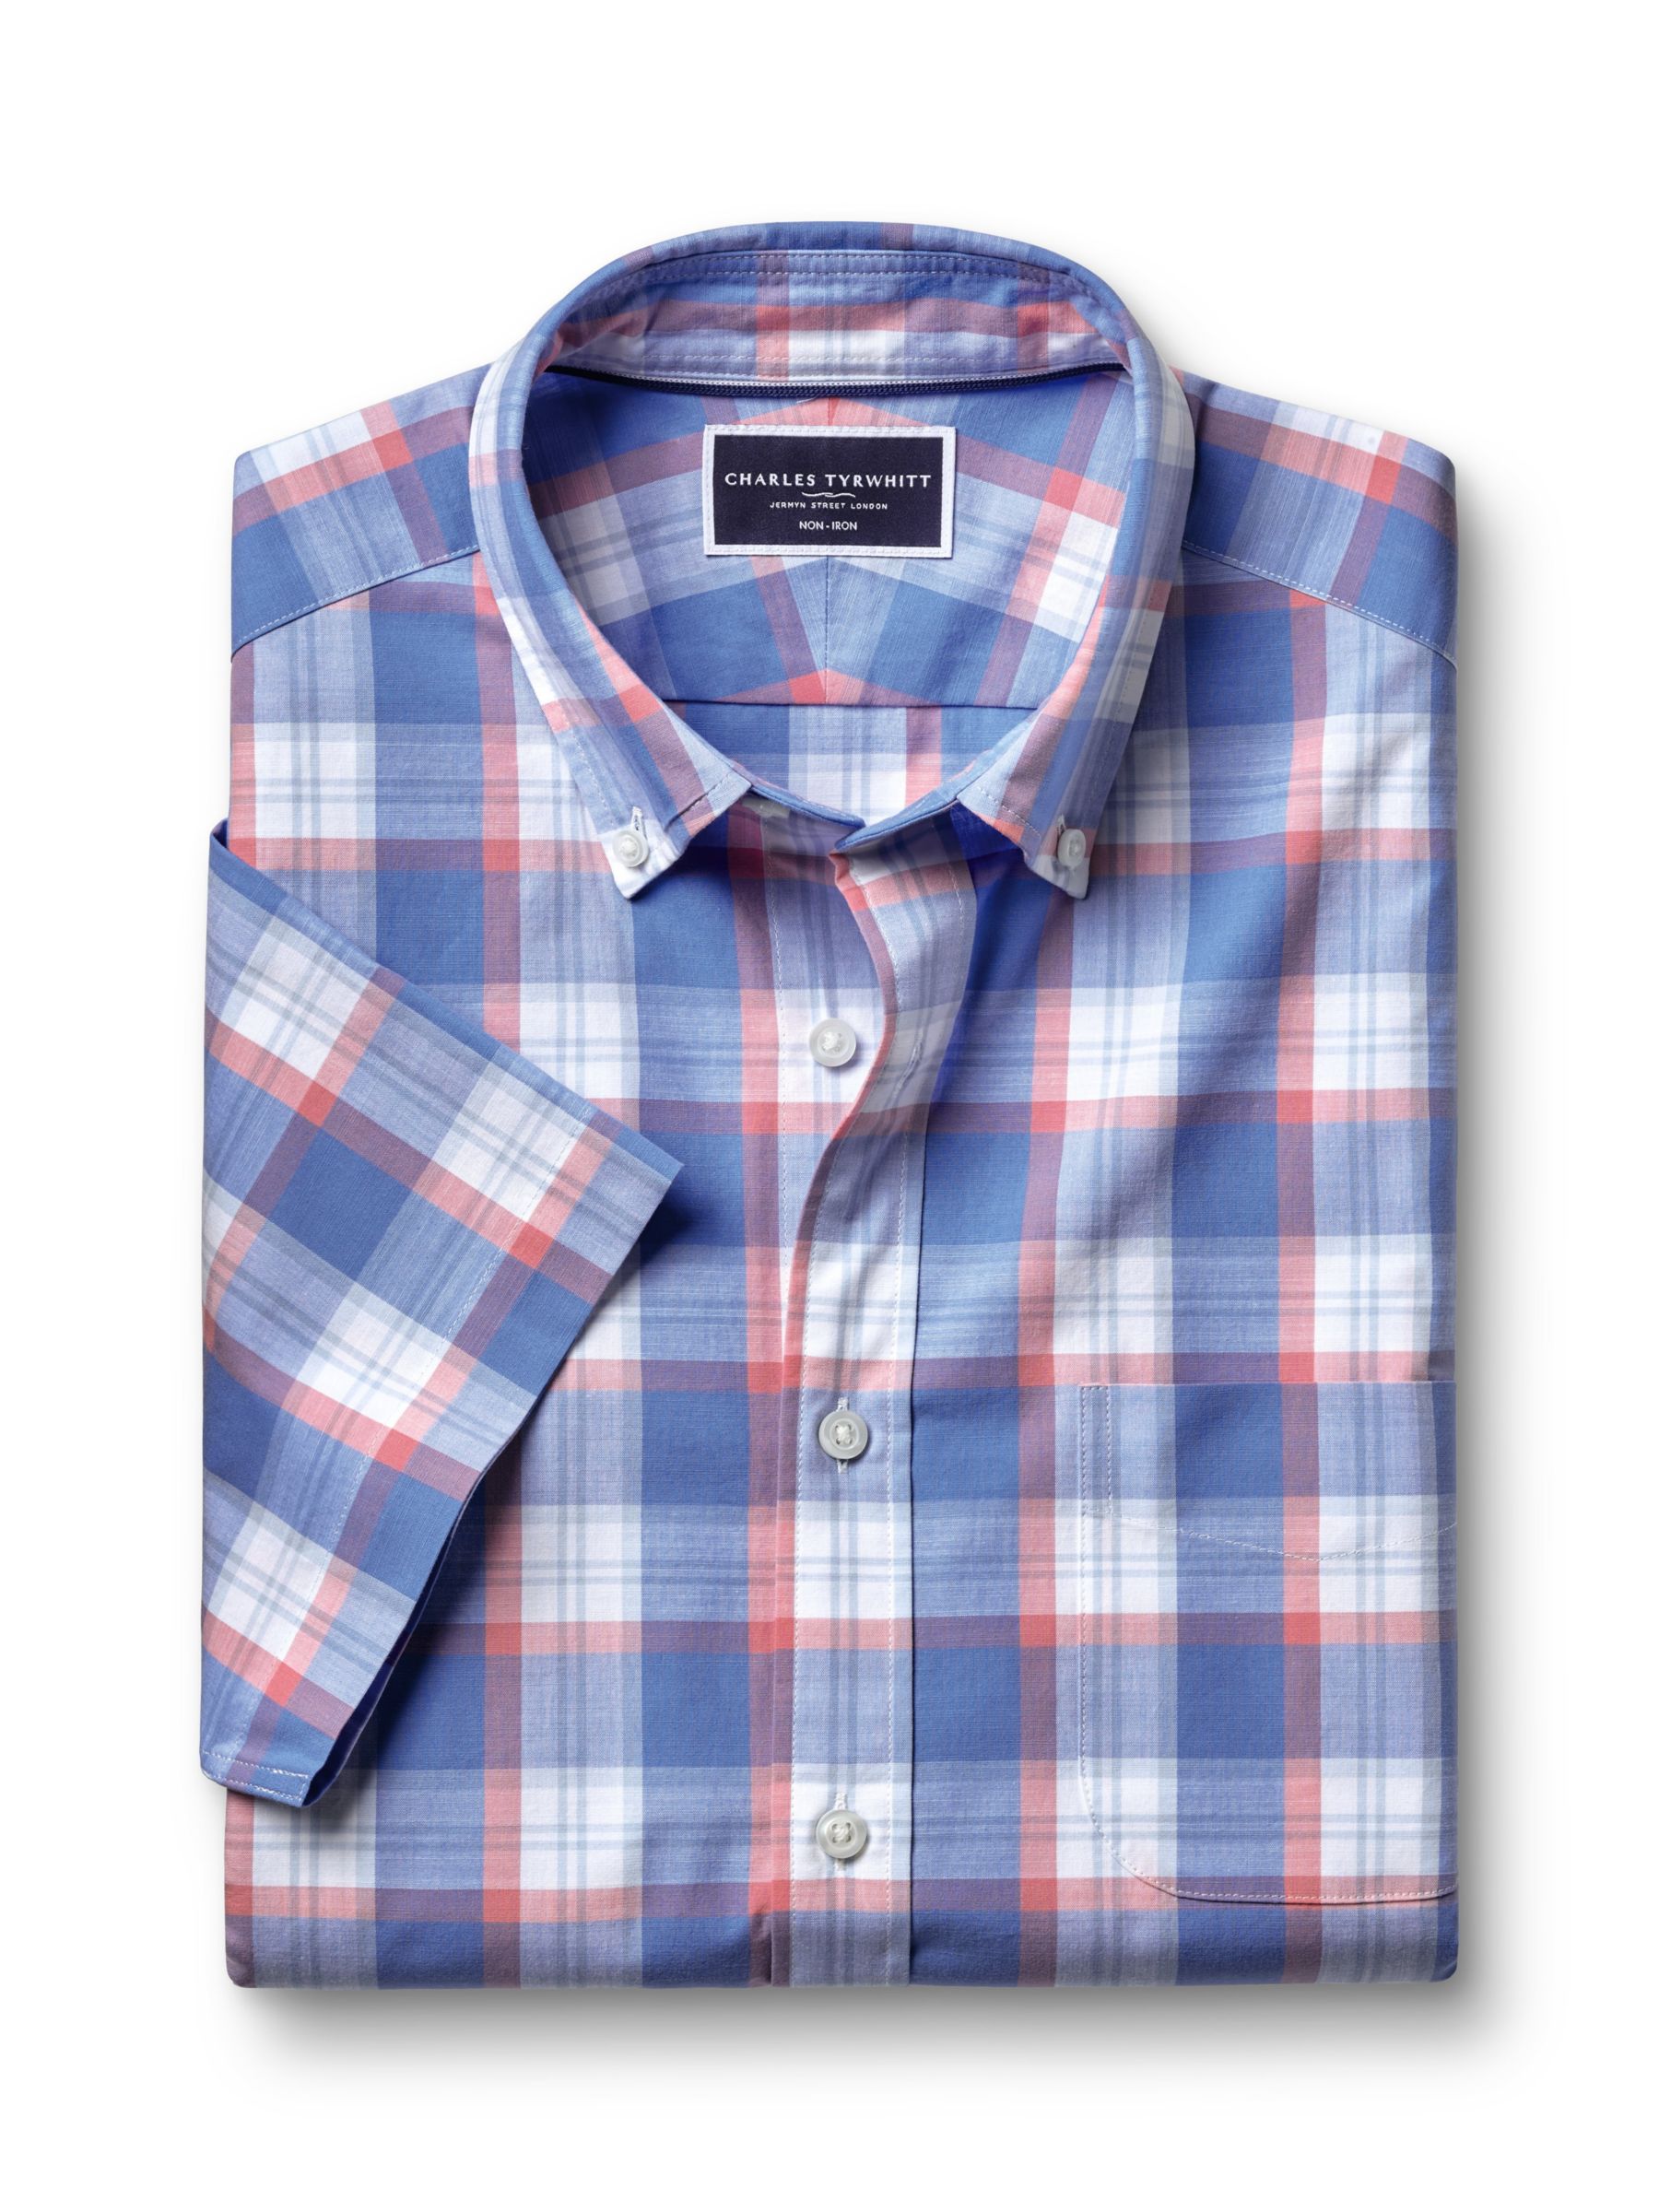 Charles Tyrwhitt Overcheck Short Sleeve Non-Iron Poplin Shirt, Pink/Multi, M